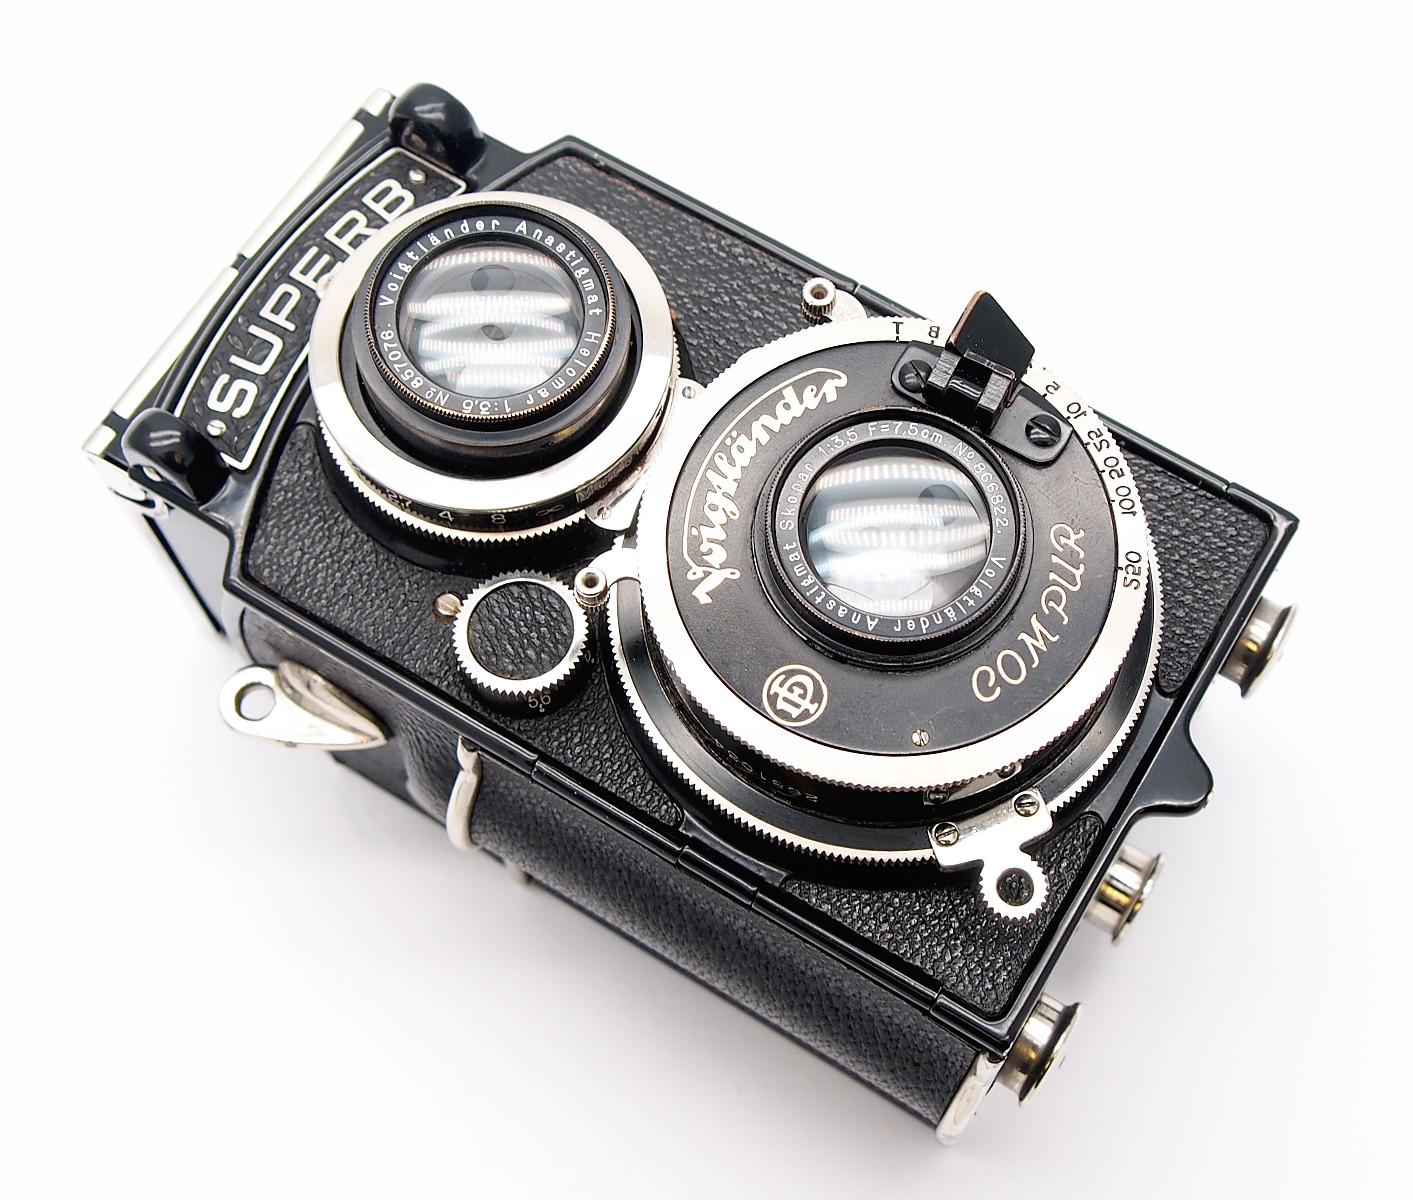 Voigtlander Superb 6x6cm Twin lens Reflex, Cased #8894